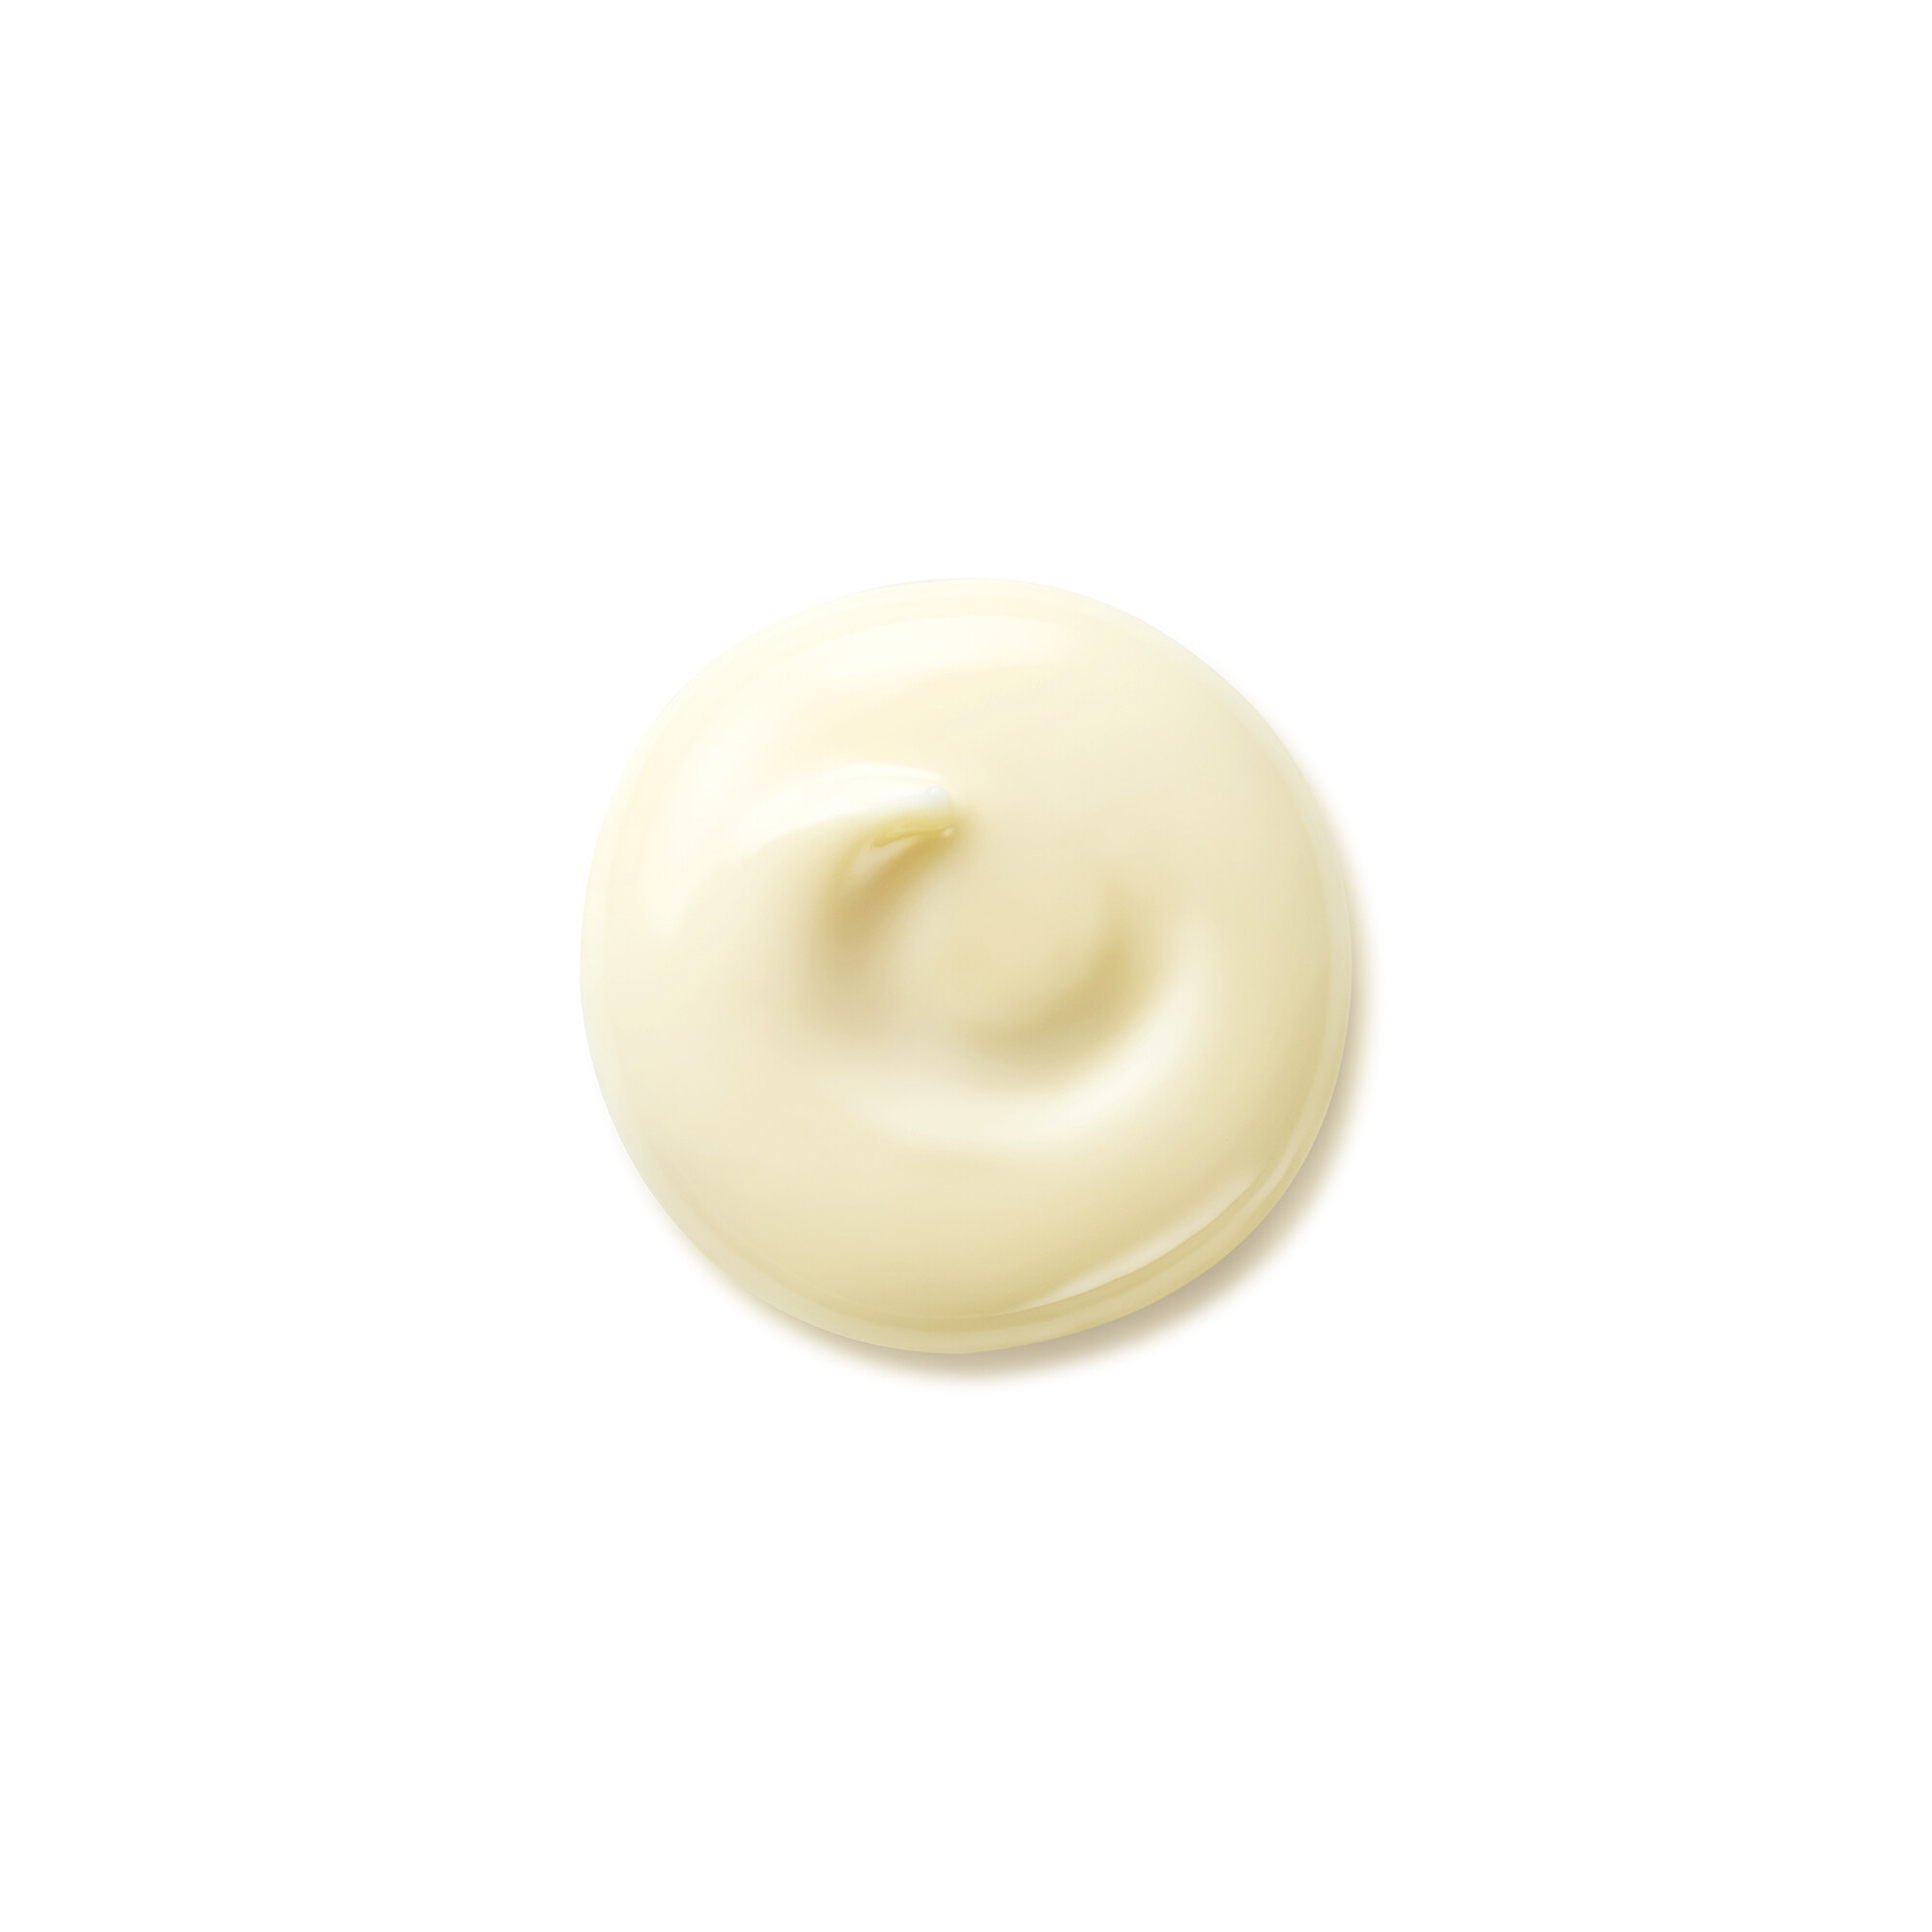 Shiseido Shiseido Benefiance Wrinkle Smoothing Day Cream 50ml kaufen